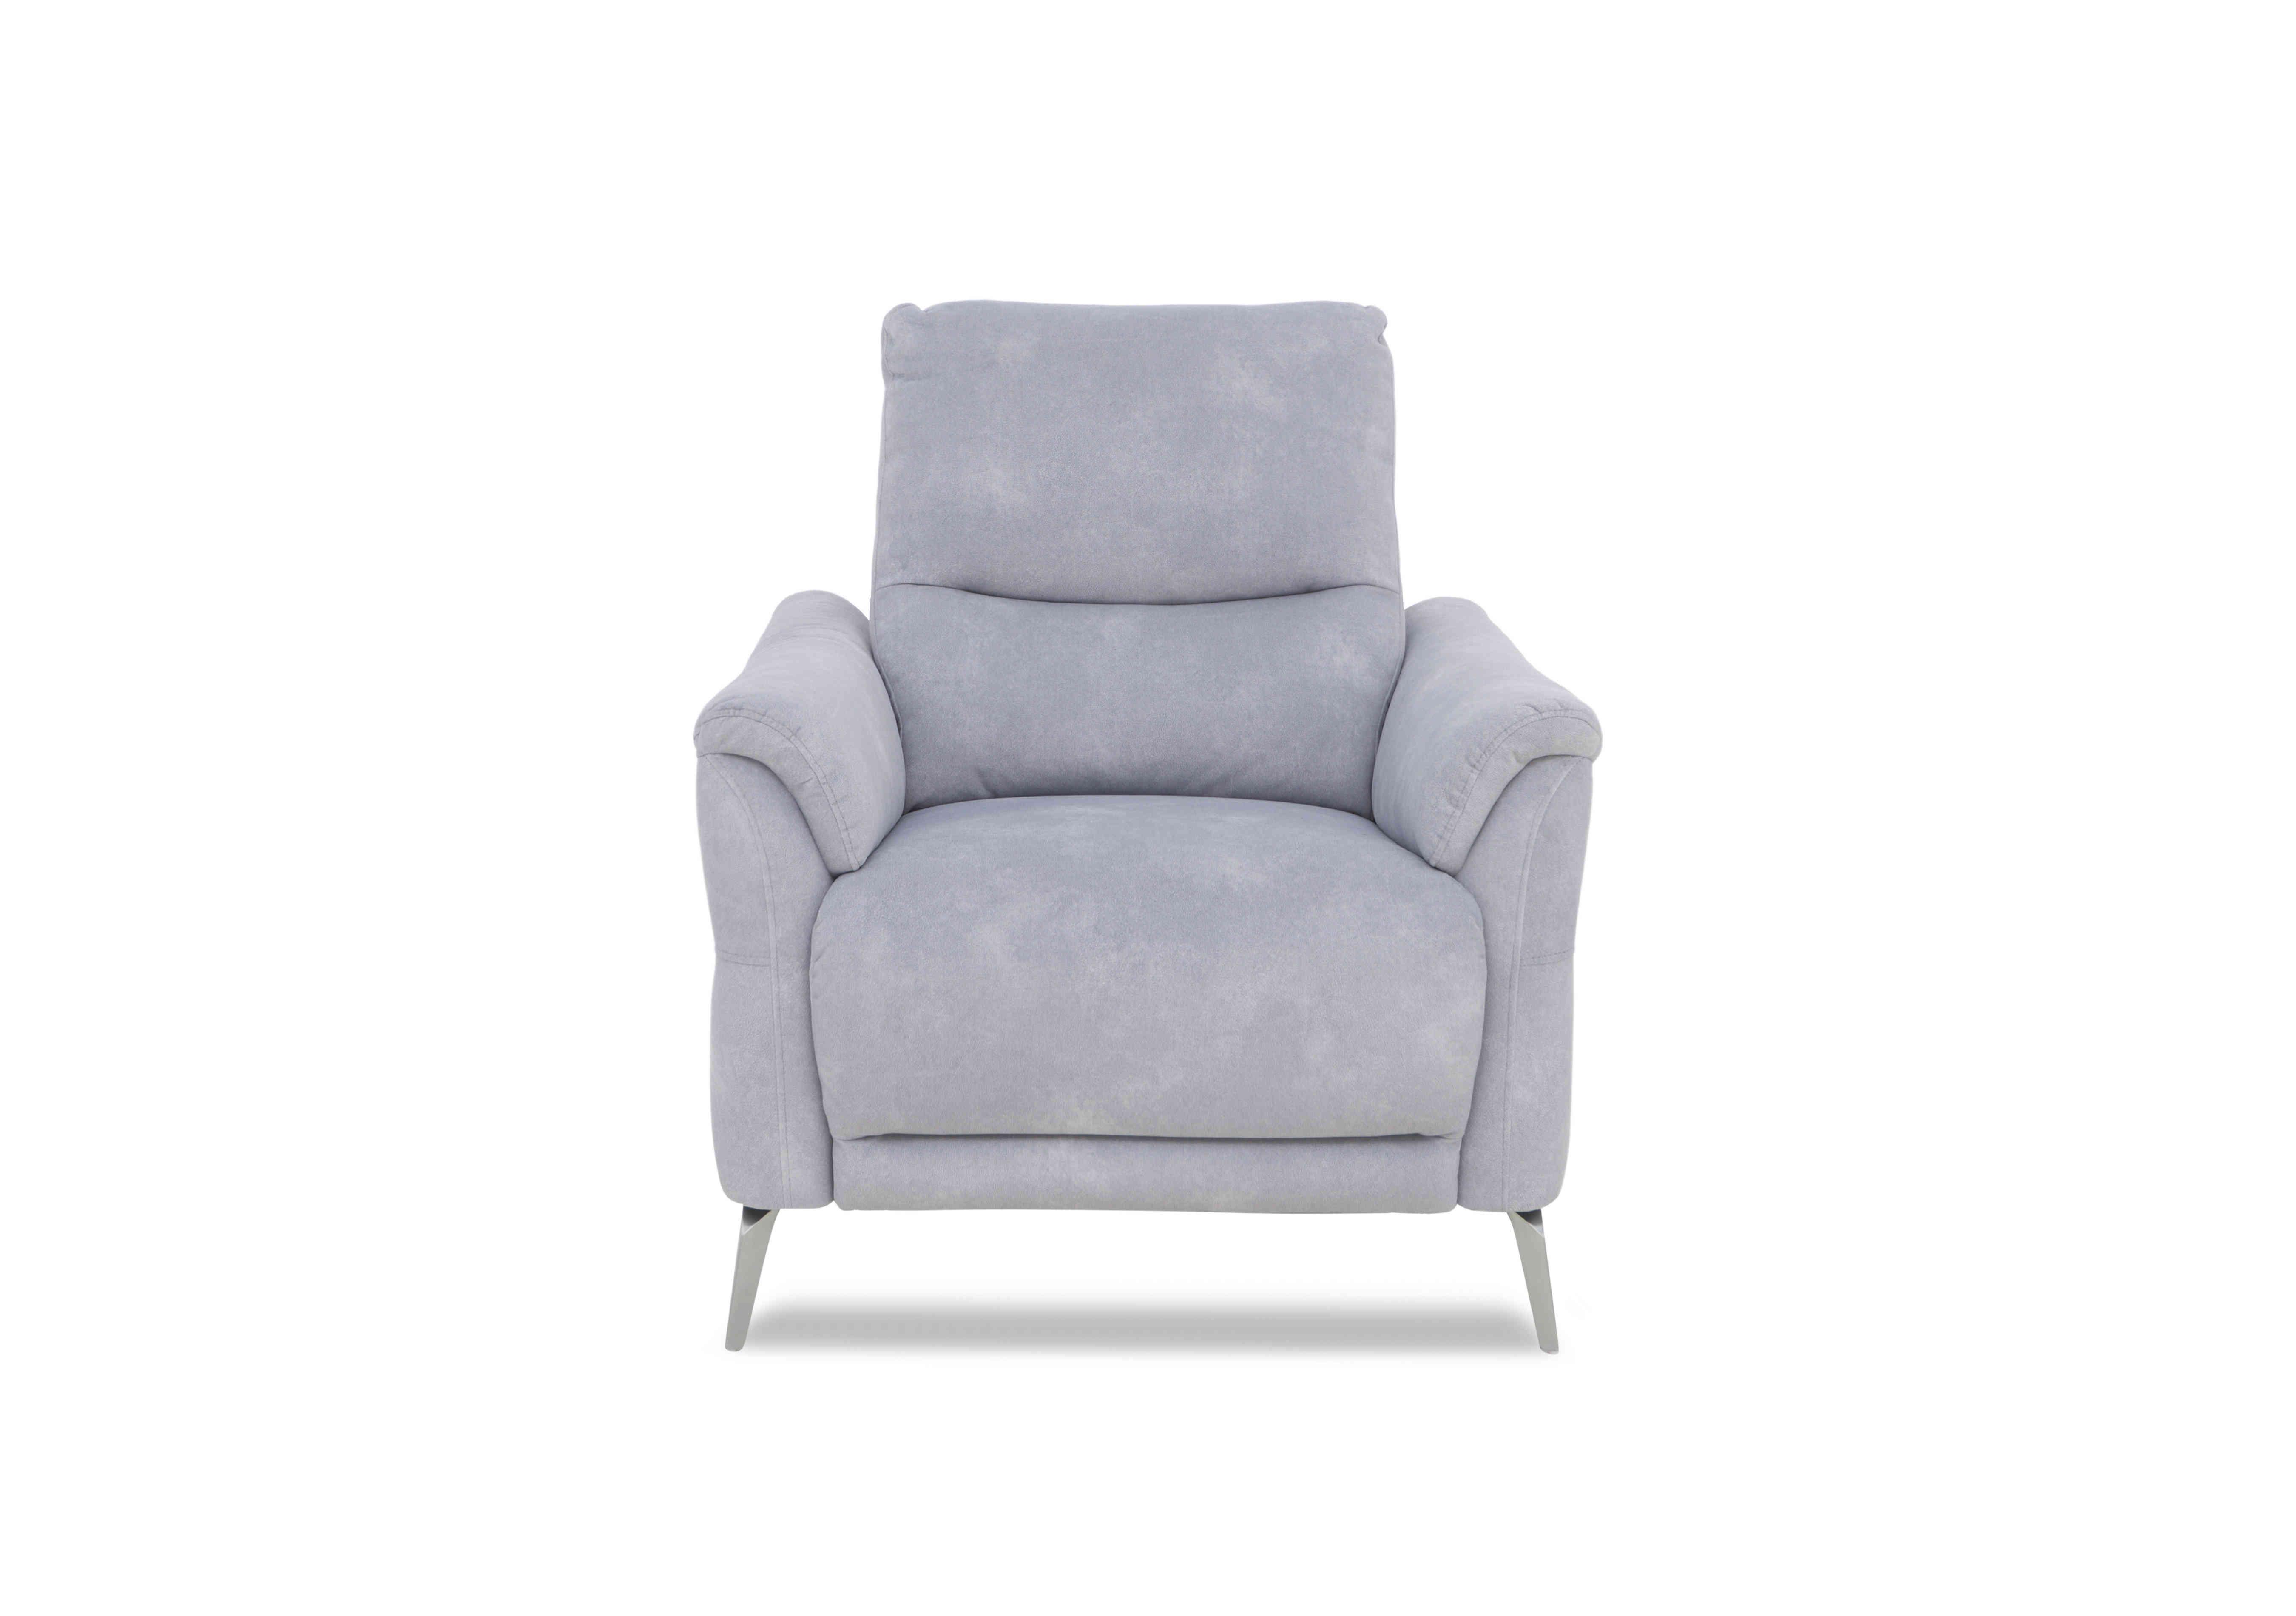 Daytona Fabric Chair in 43516 Dexter Smoke on Furniture Village